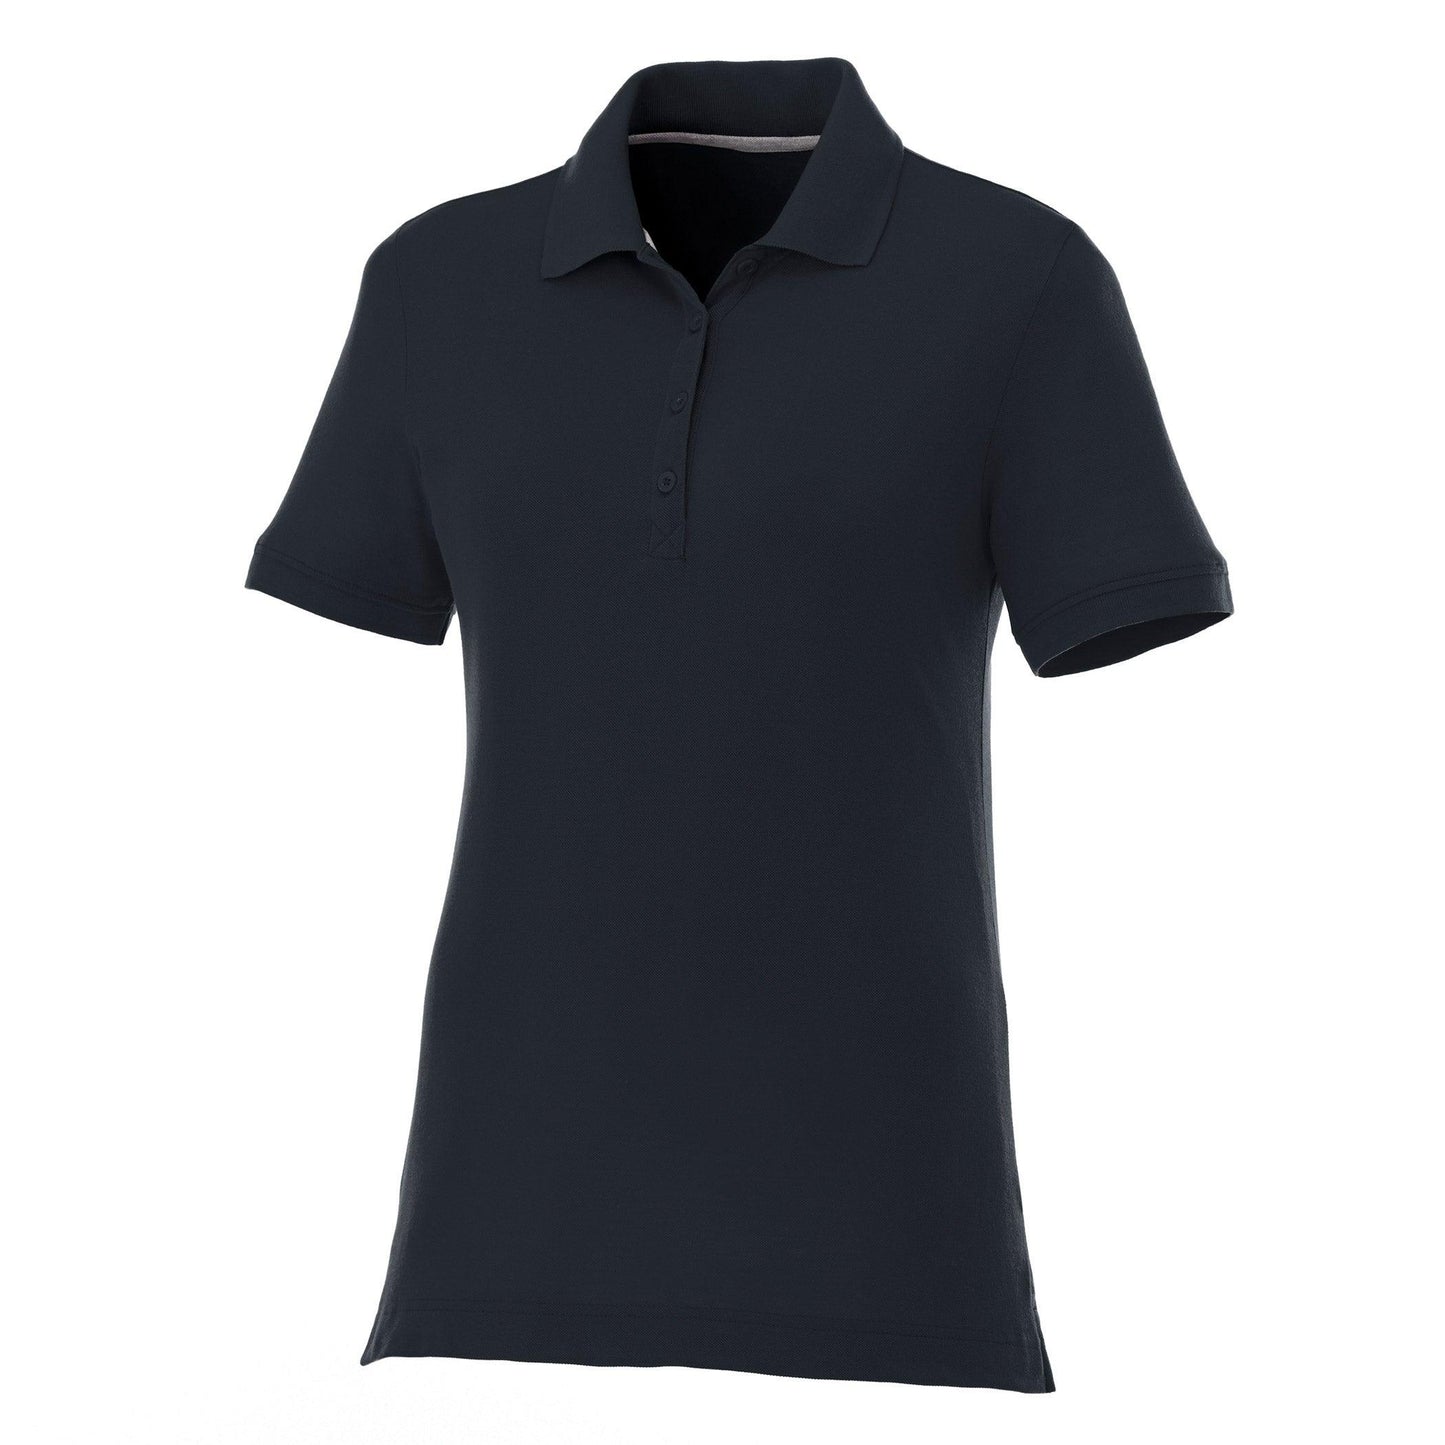 Women's Polo Shirt in Navy Polo Shirt Trimark Navy XS 